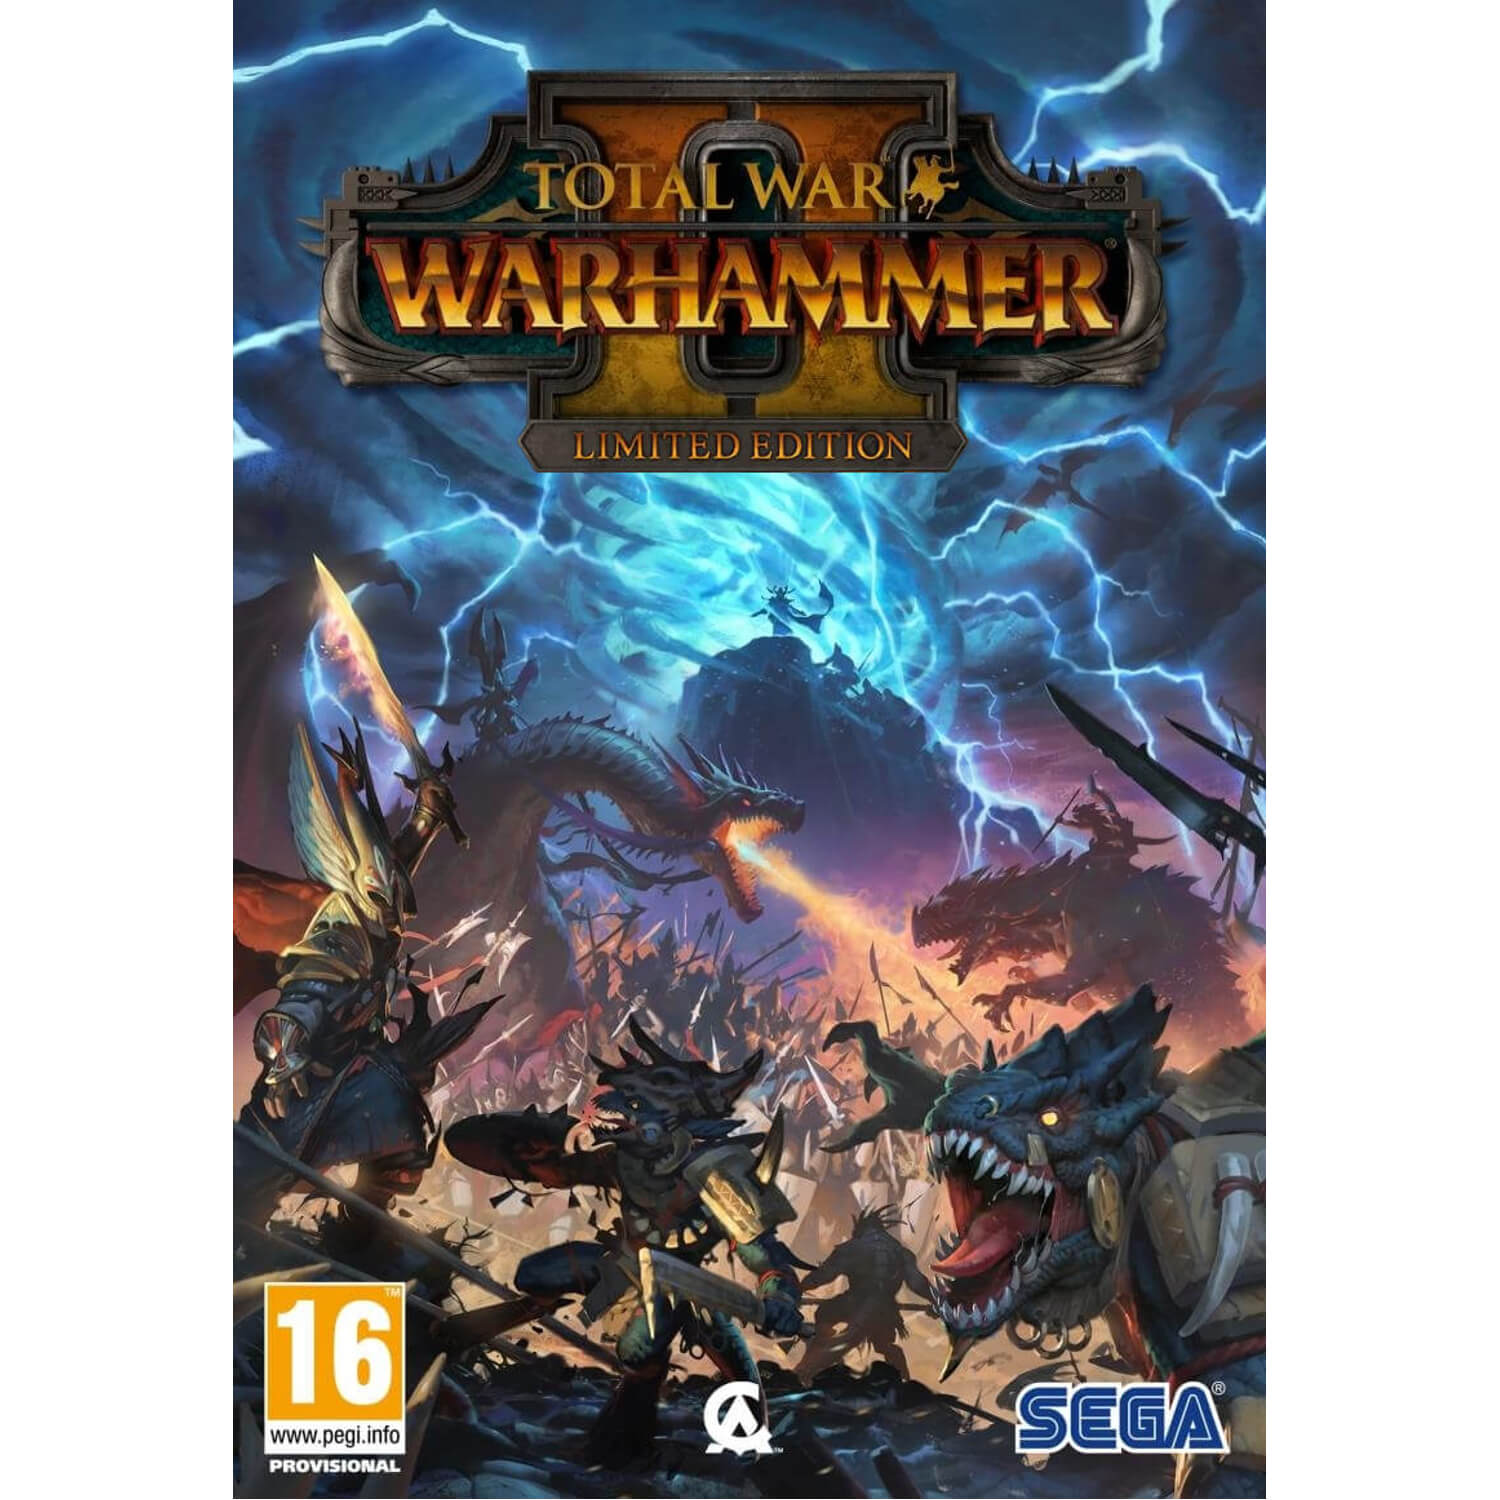  Joc PC Total War Warhammer 2 Limited Edition 